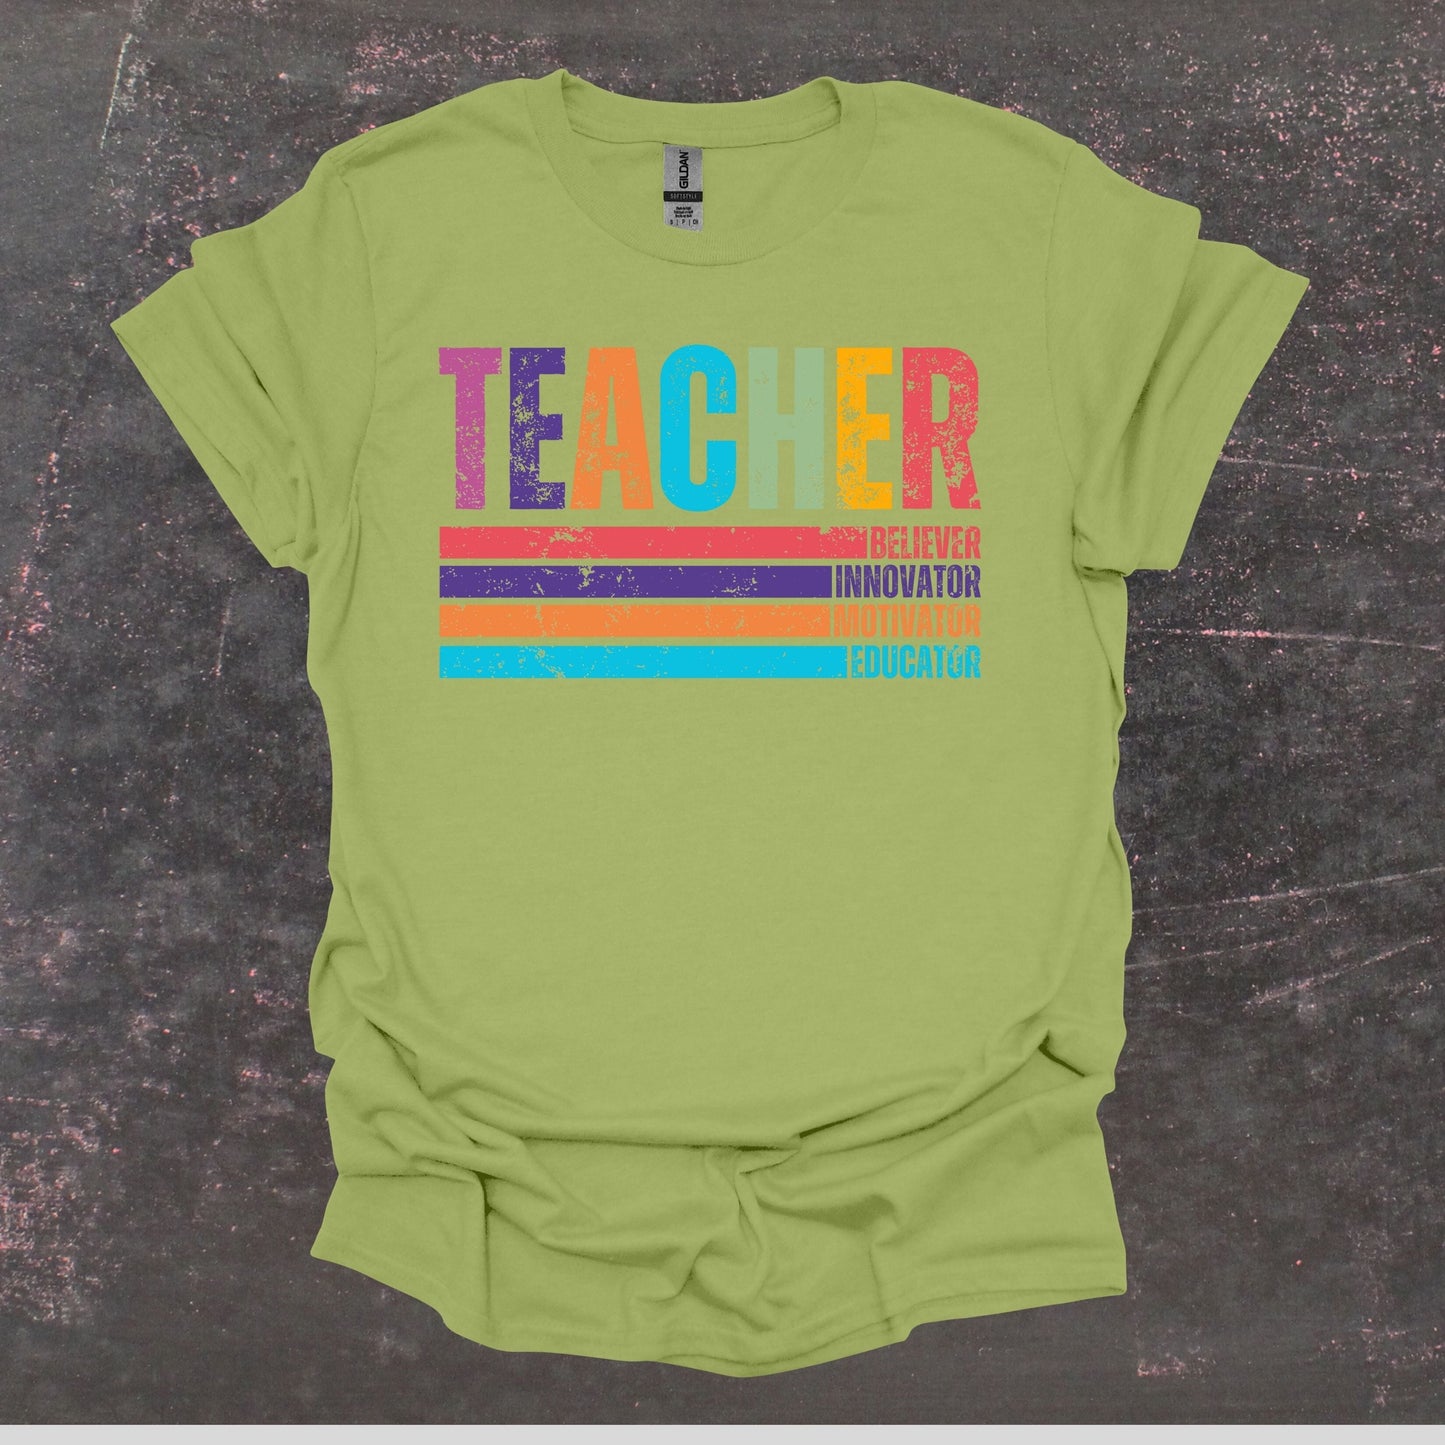 Teacher Believer Innovator Motivator Educator - Teacher T Shirt - Adult Tee Shirts T-Shirts Graphic Avenue Kiwi Adult Small 